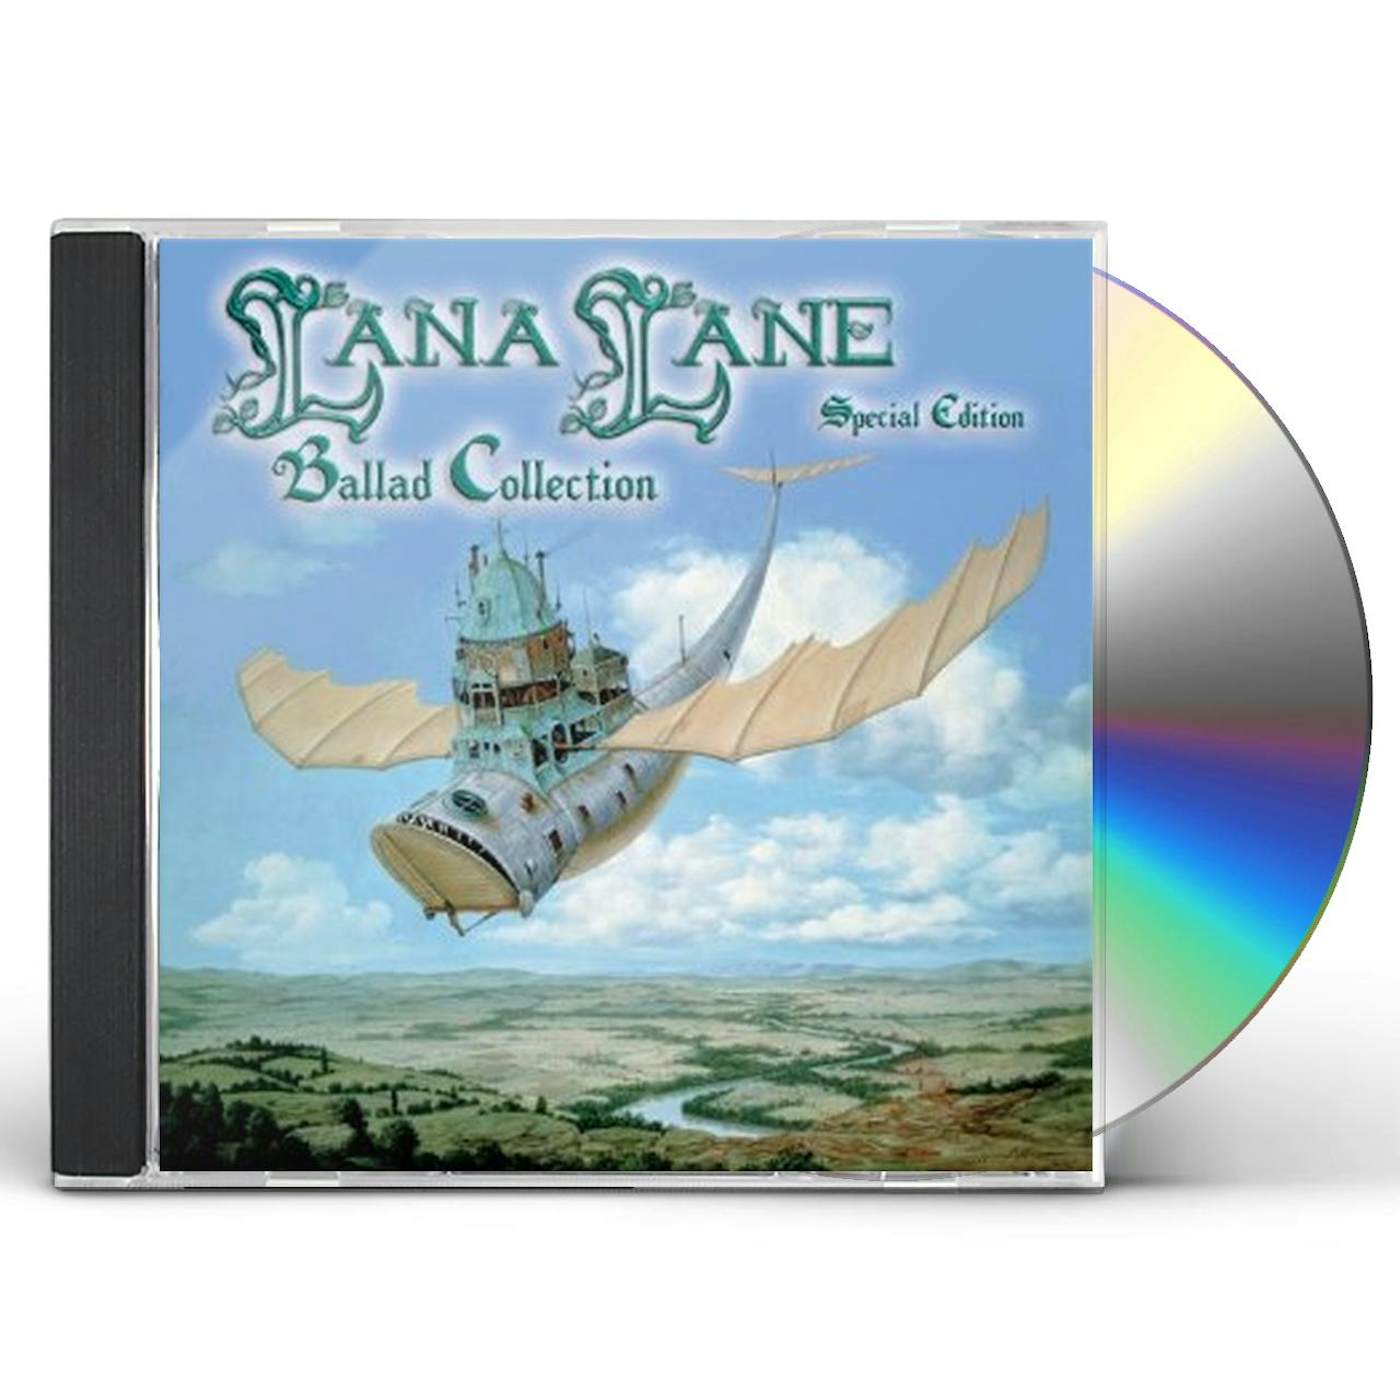 Lana Lane BALLAD COLLECTION CD